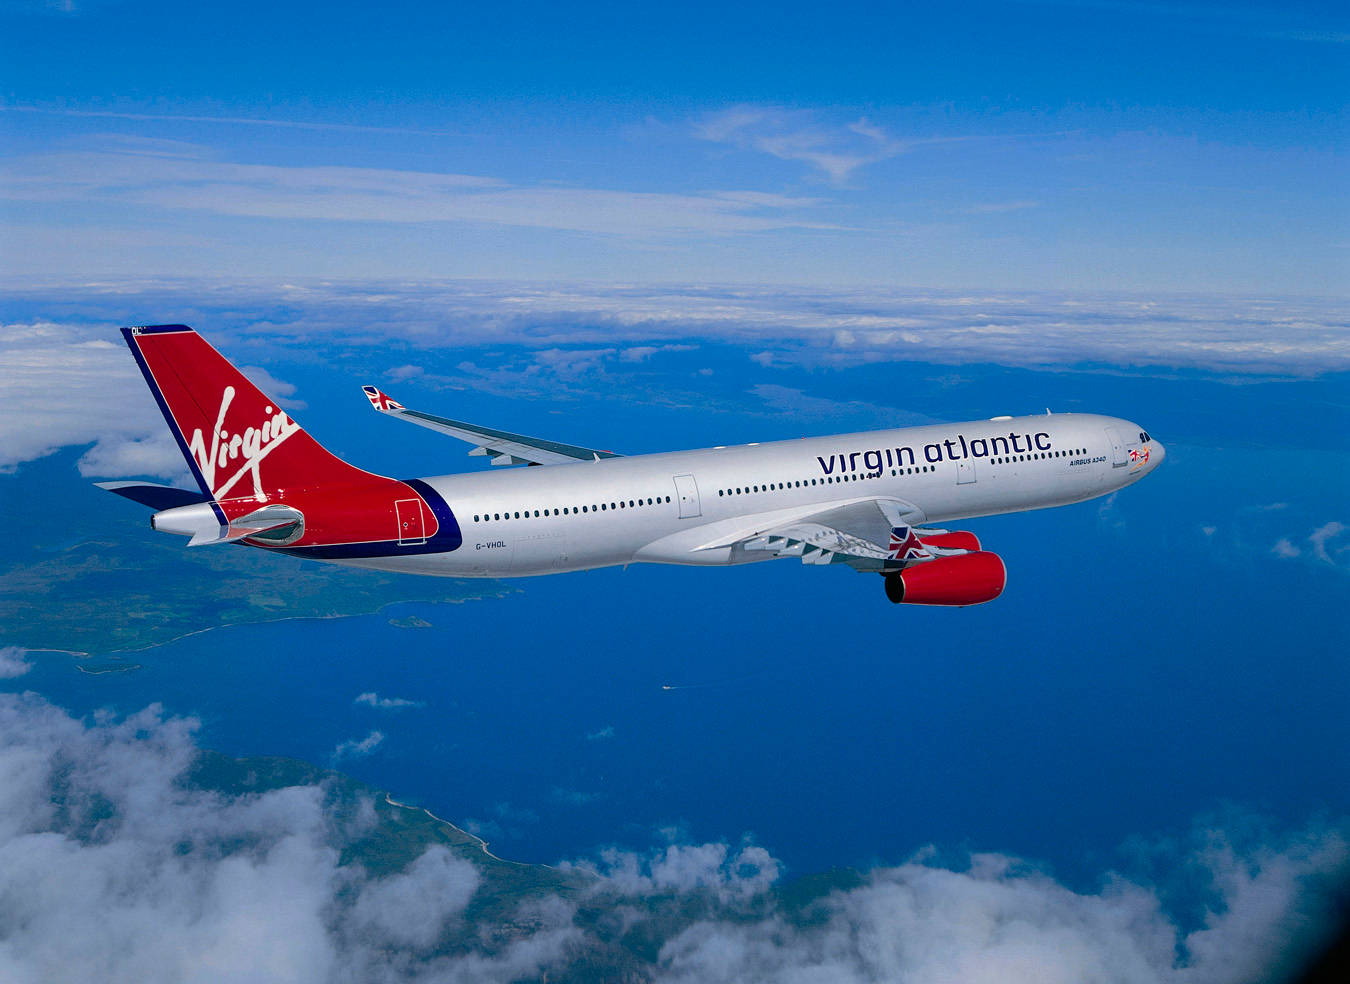 Salendodell'aereo Virgin Atlantic Sfondo